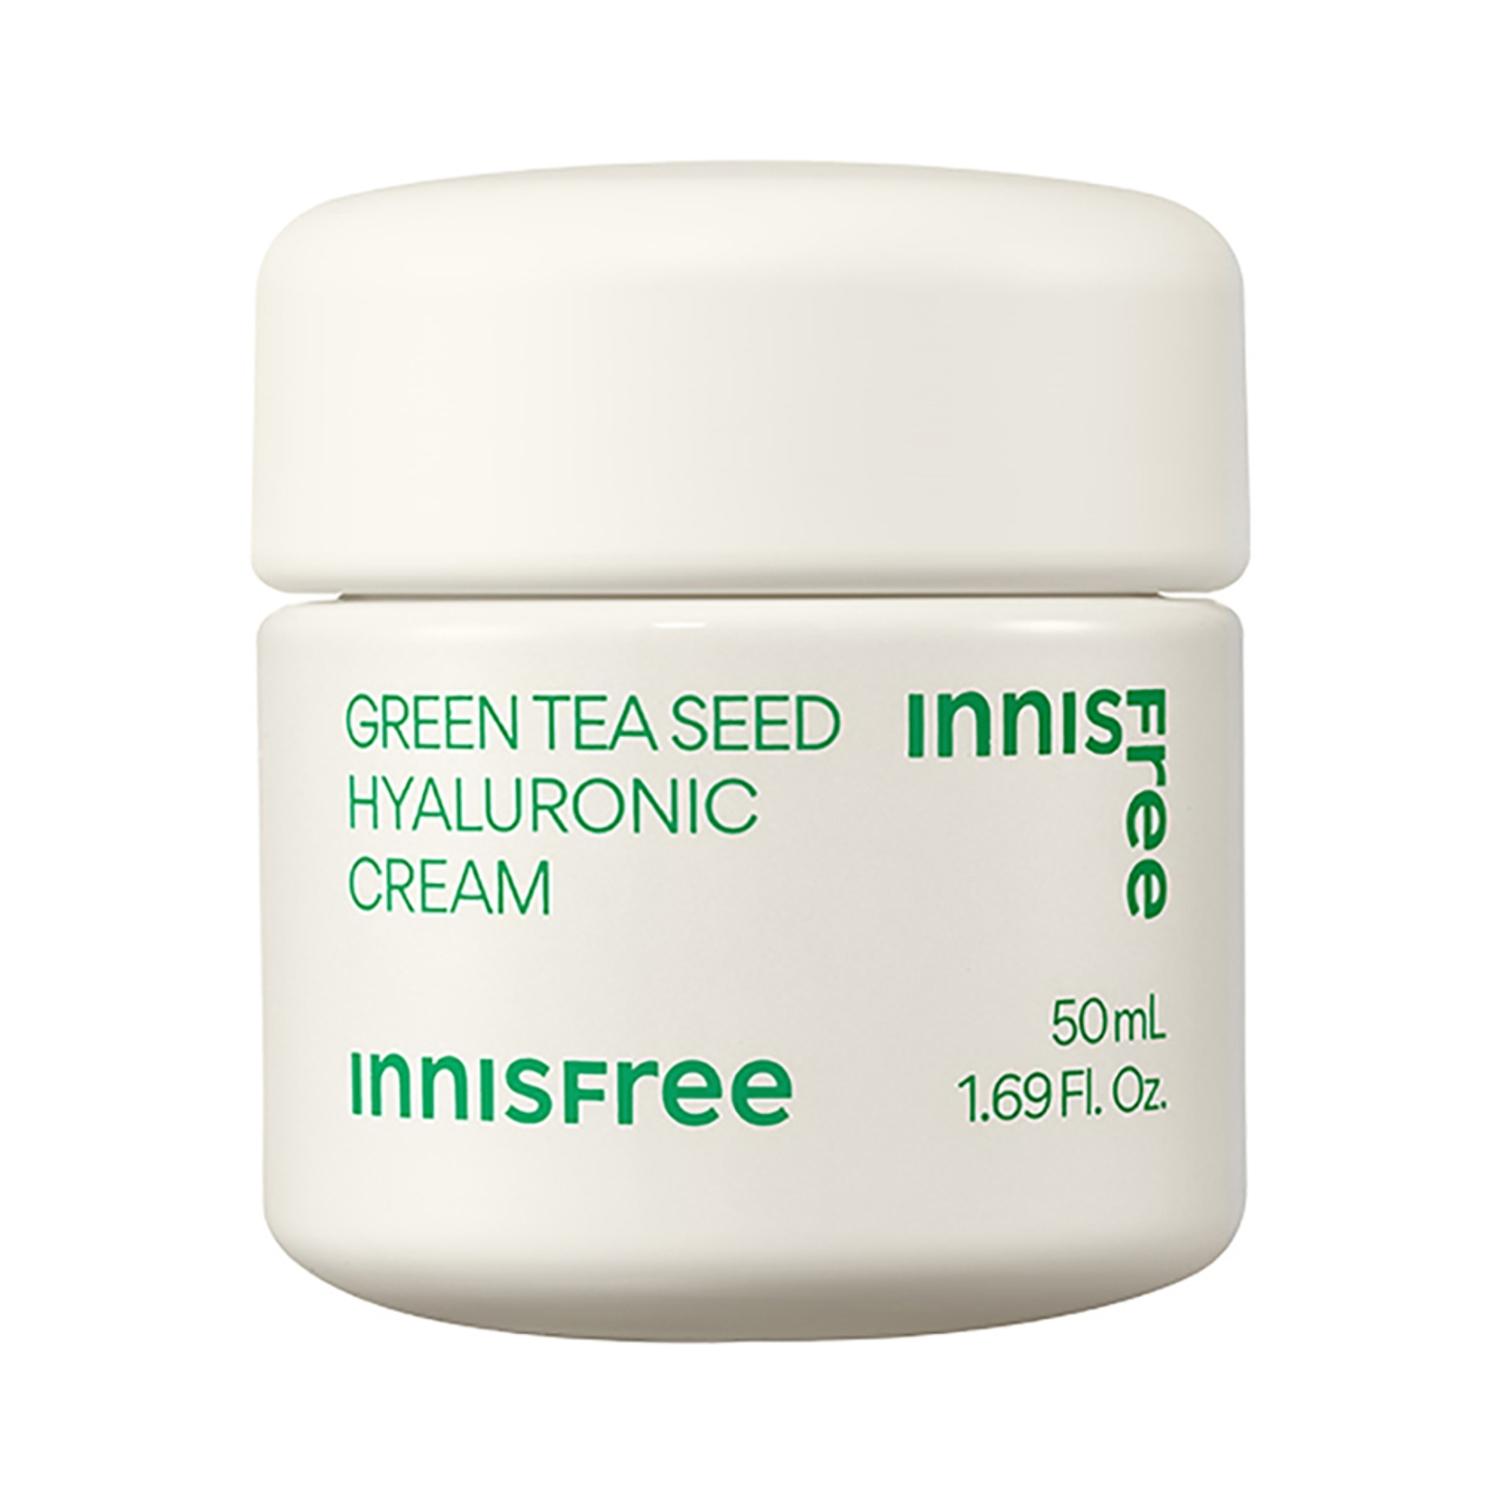 innisfree green tea seed hyaluronic cream (50ml)